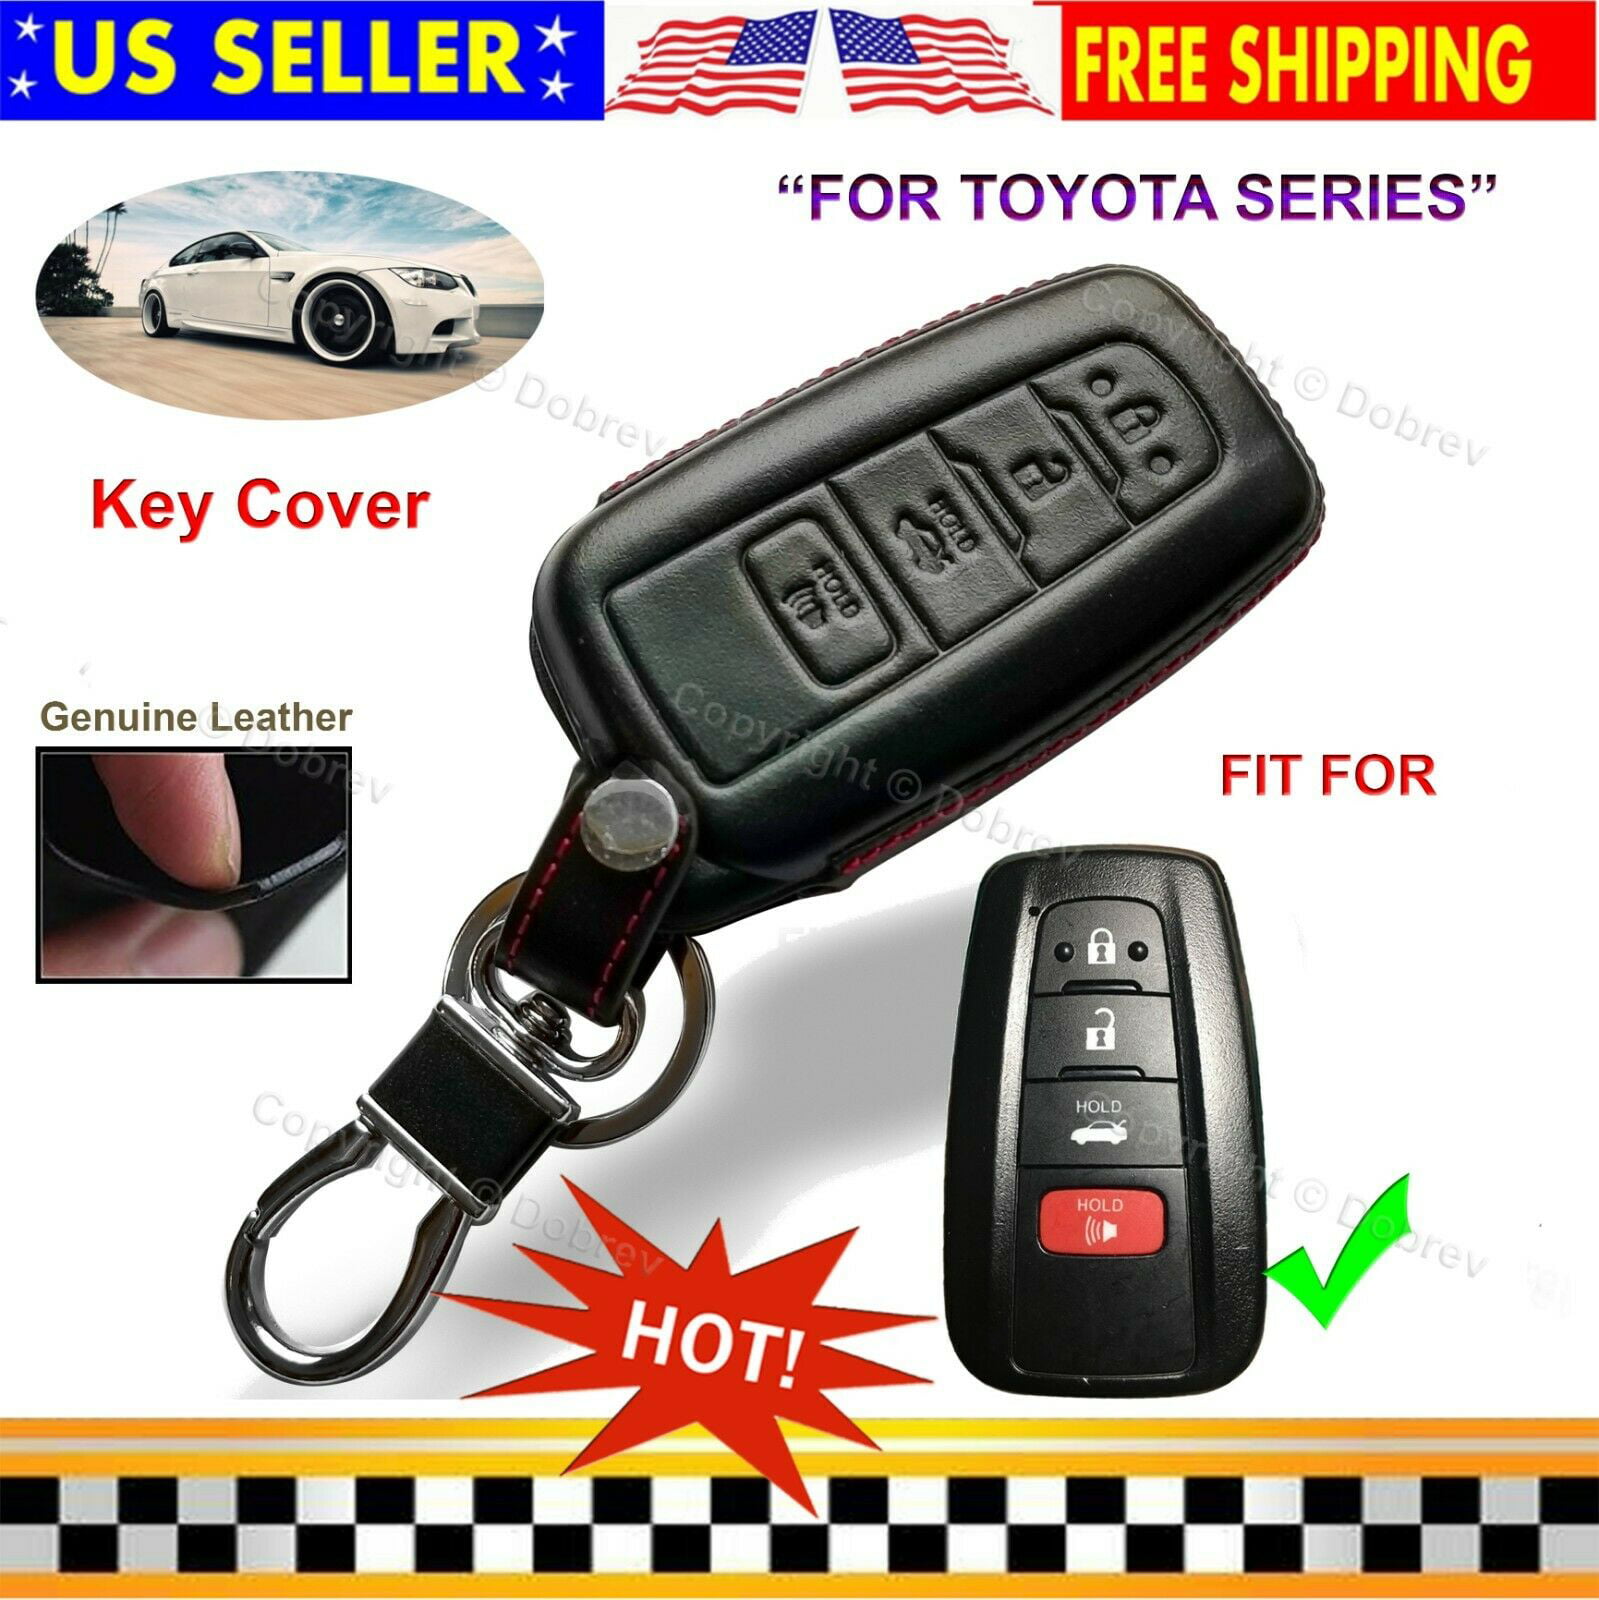 2 Keys Rubber Button Key Remote Control For Toyota Yaris Rav4 Corolla Mr2 C UR 